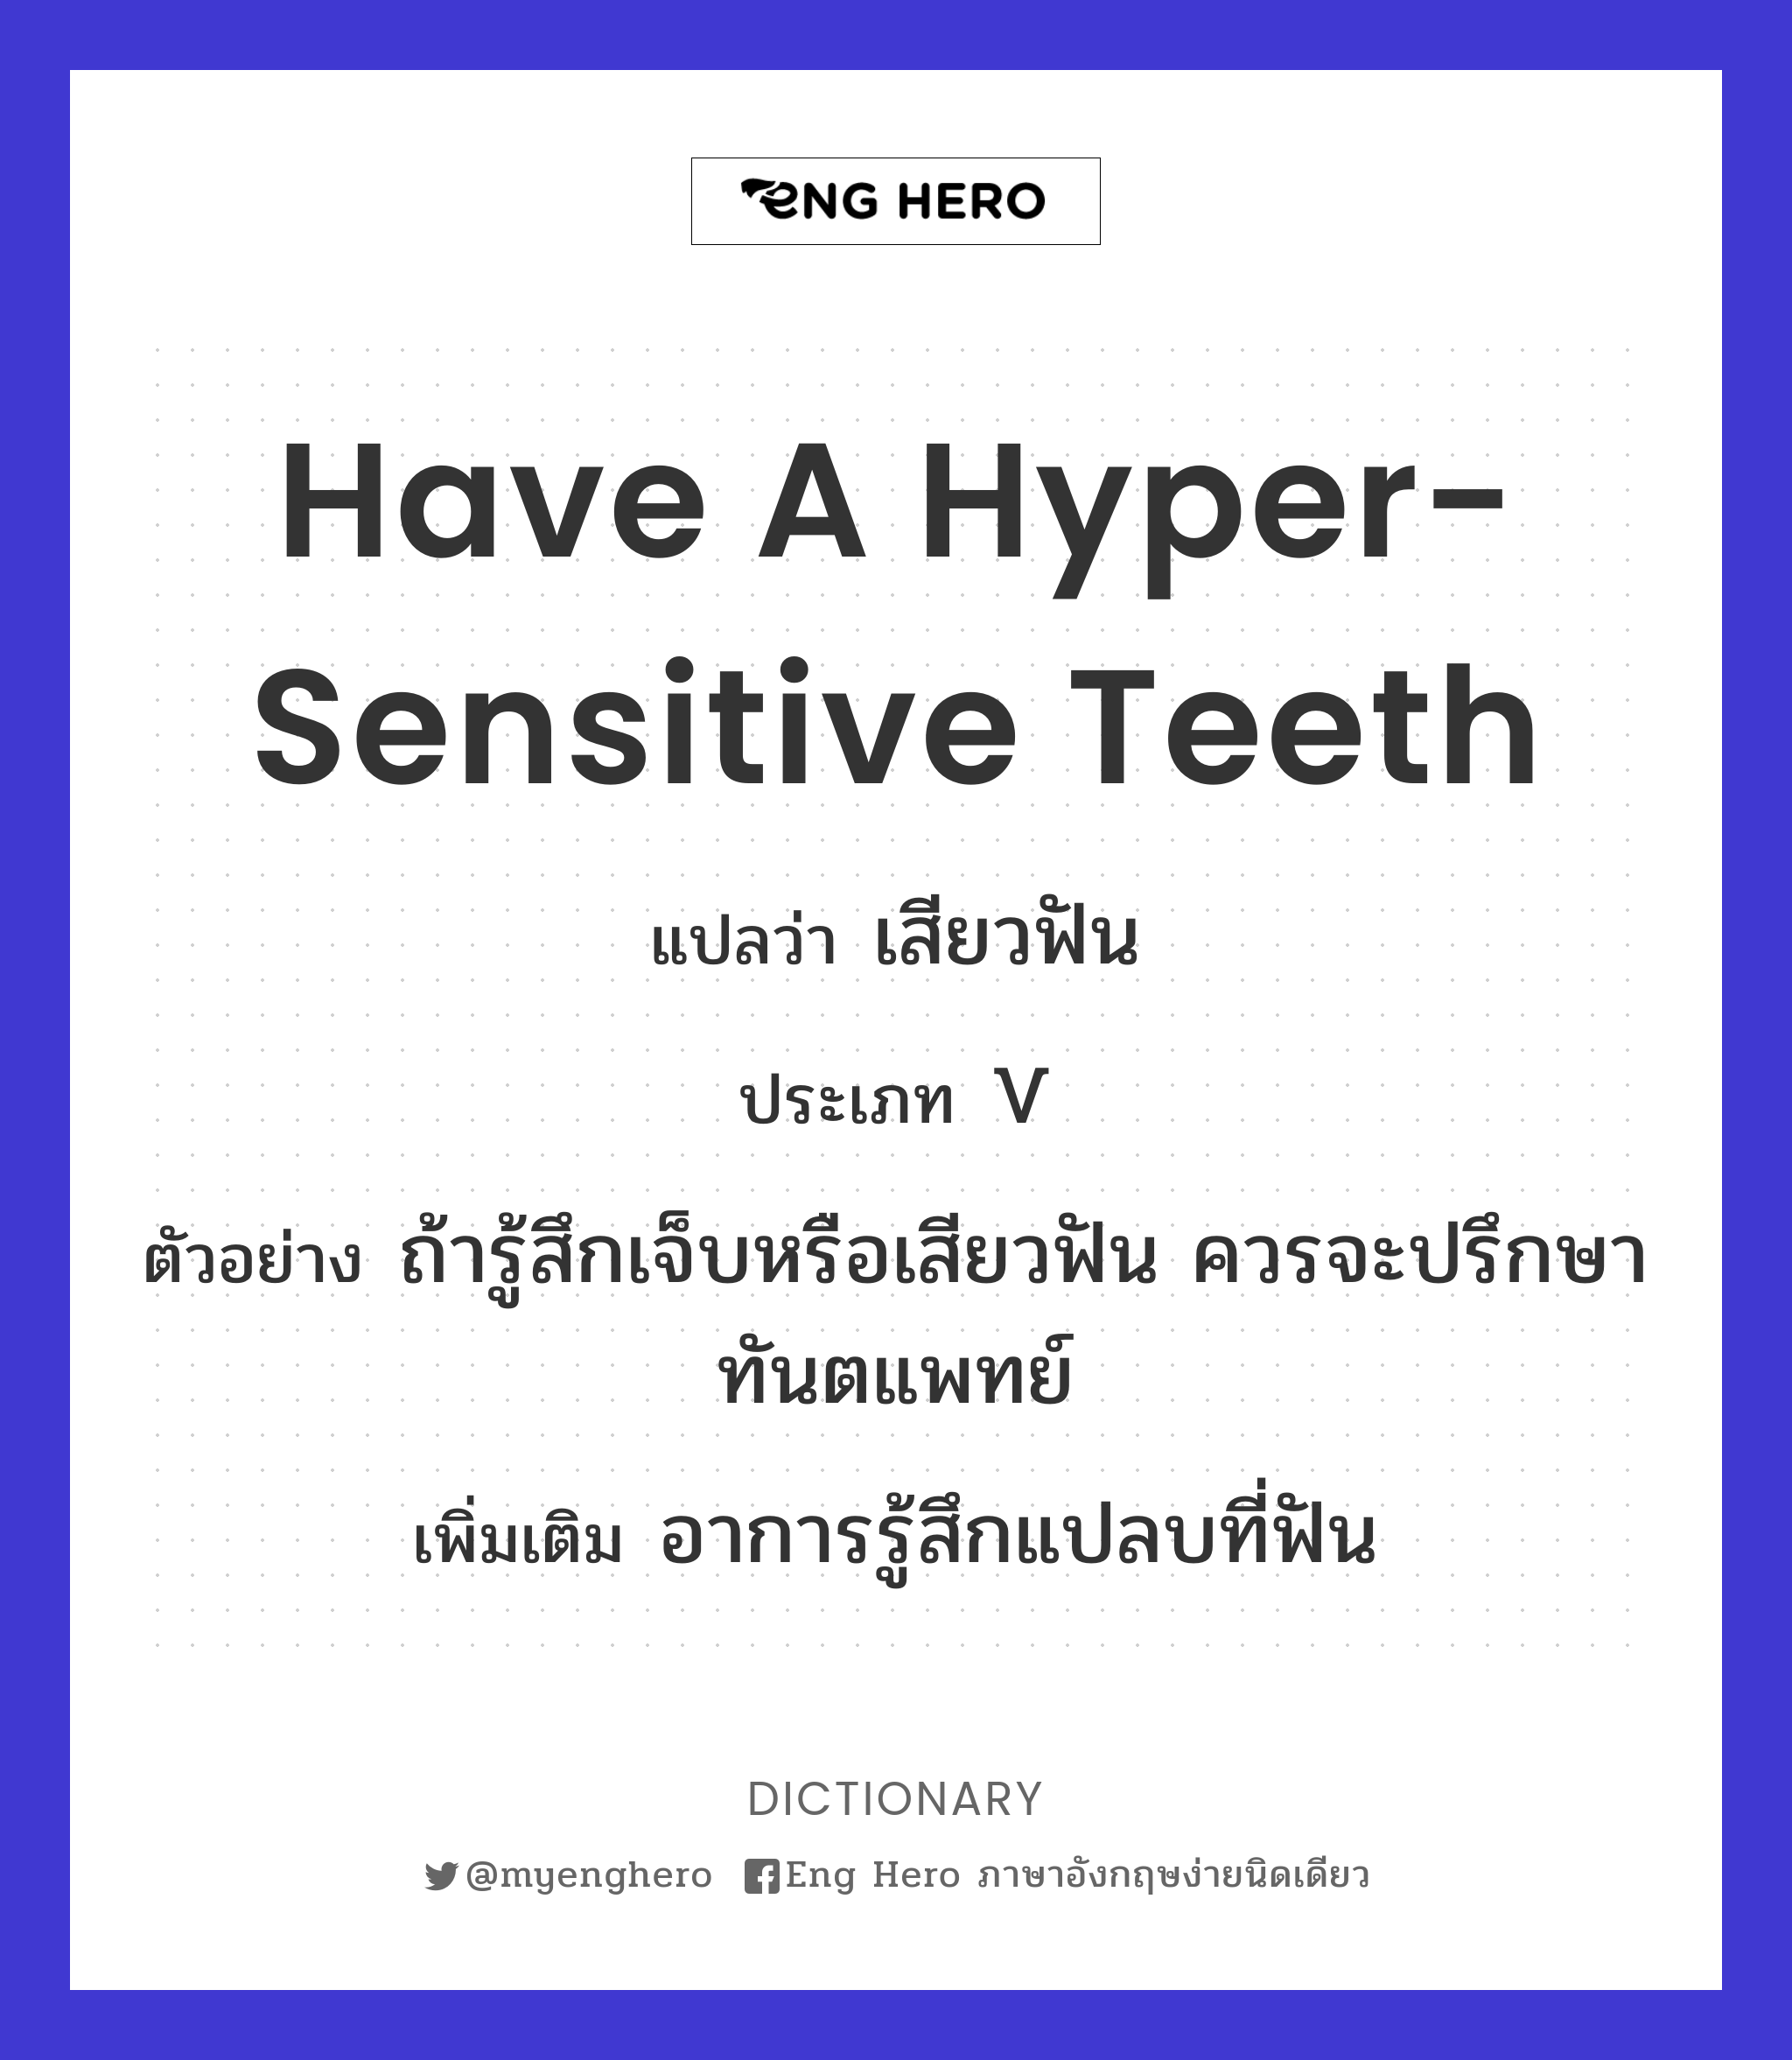 have a hyper-sensitive teeth